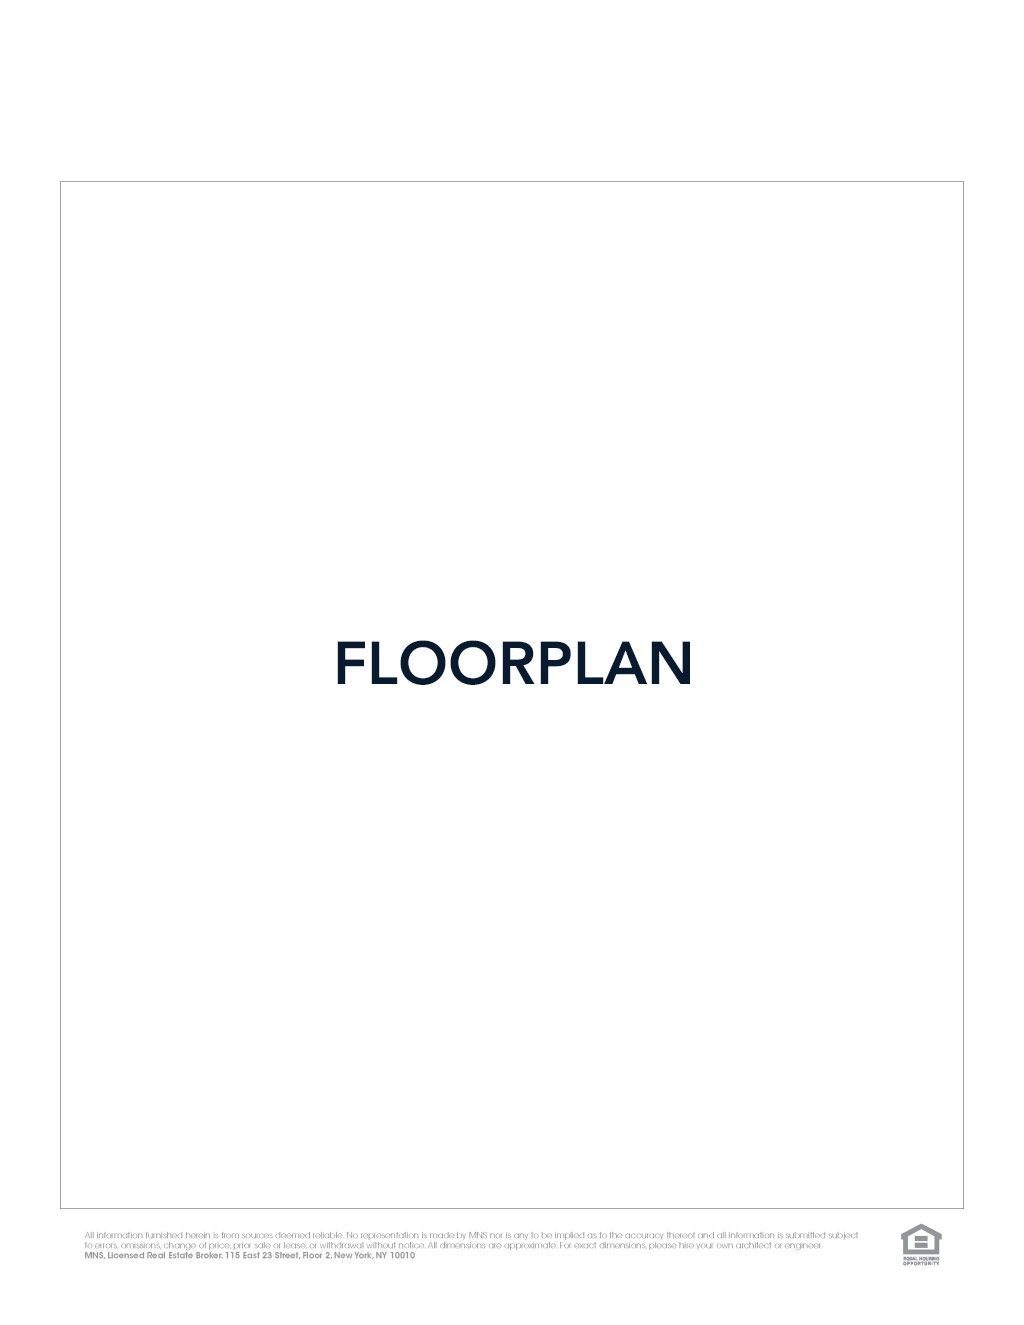 no floorplan image